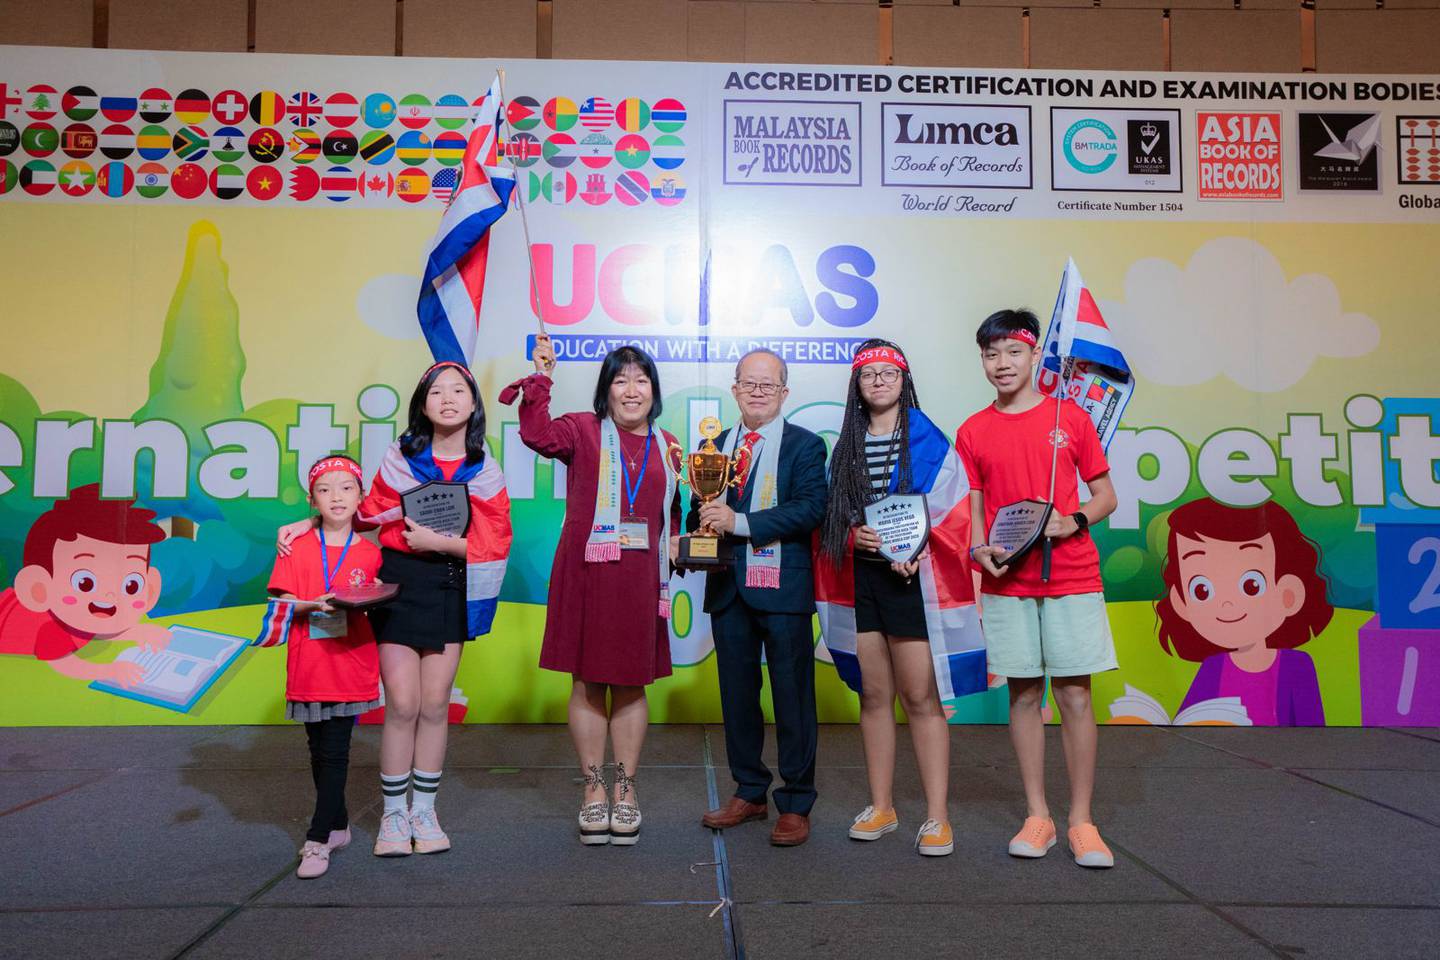 estudiantes costarricenses representaron al país en una Competencia Internacional de
aritmética mental llamada Malaysia International Competition,